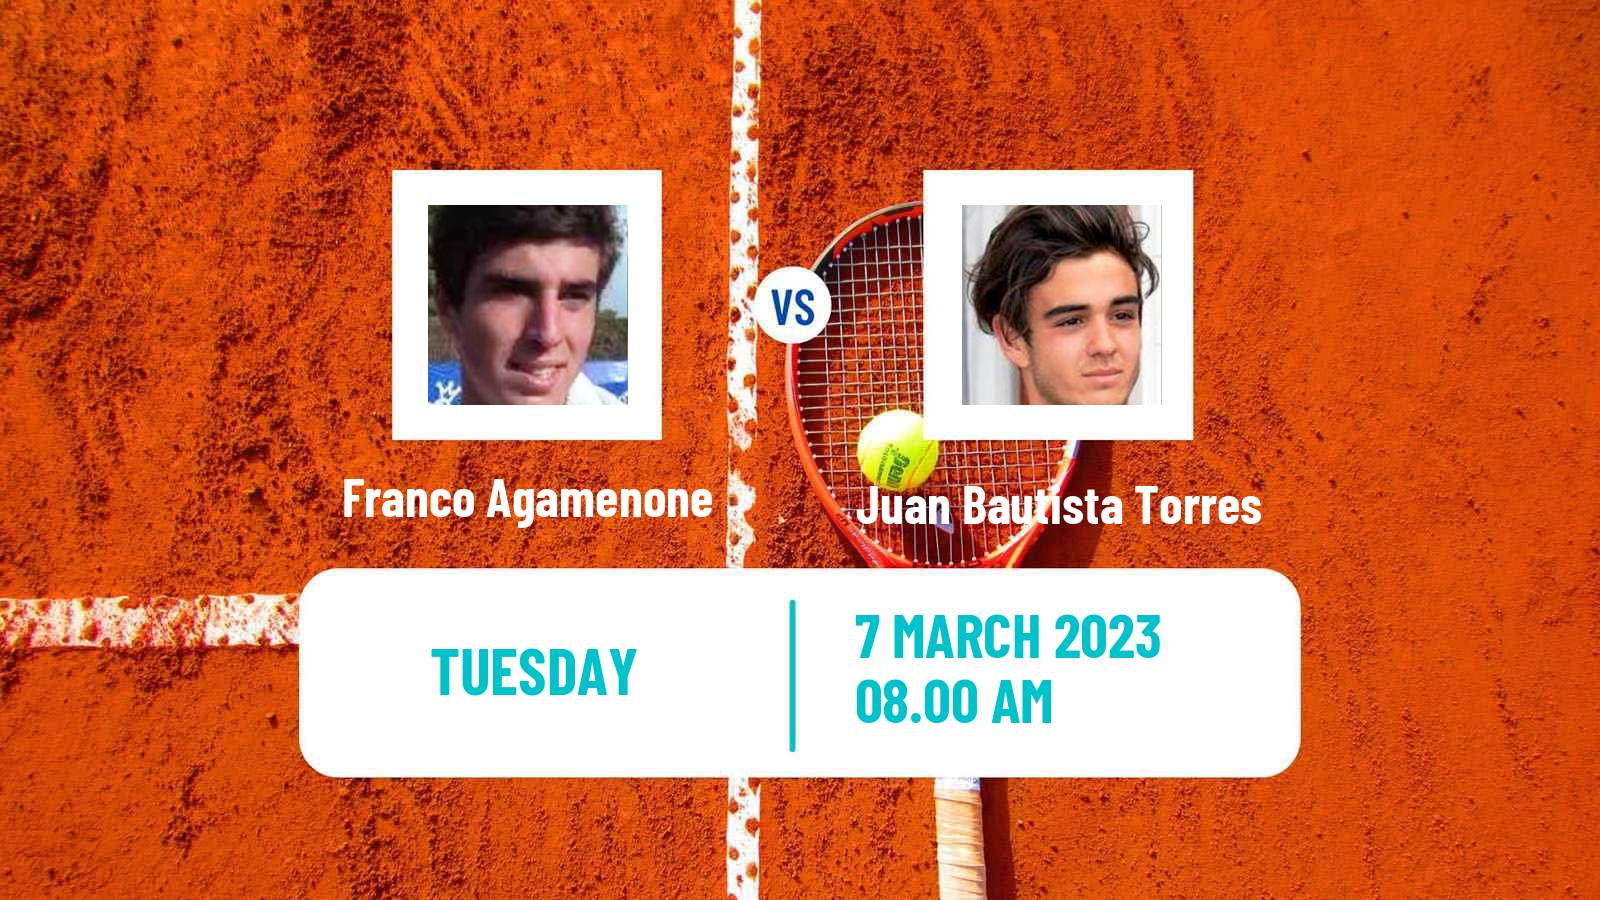 Tennis ATP Challenger Franco Agamenone - Juan Bautista Torres